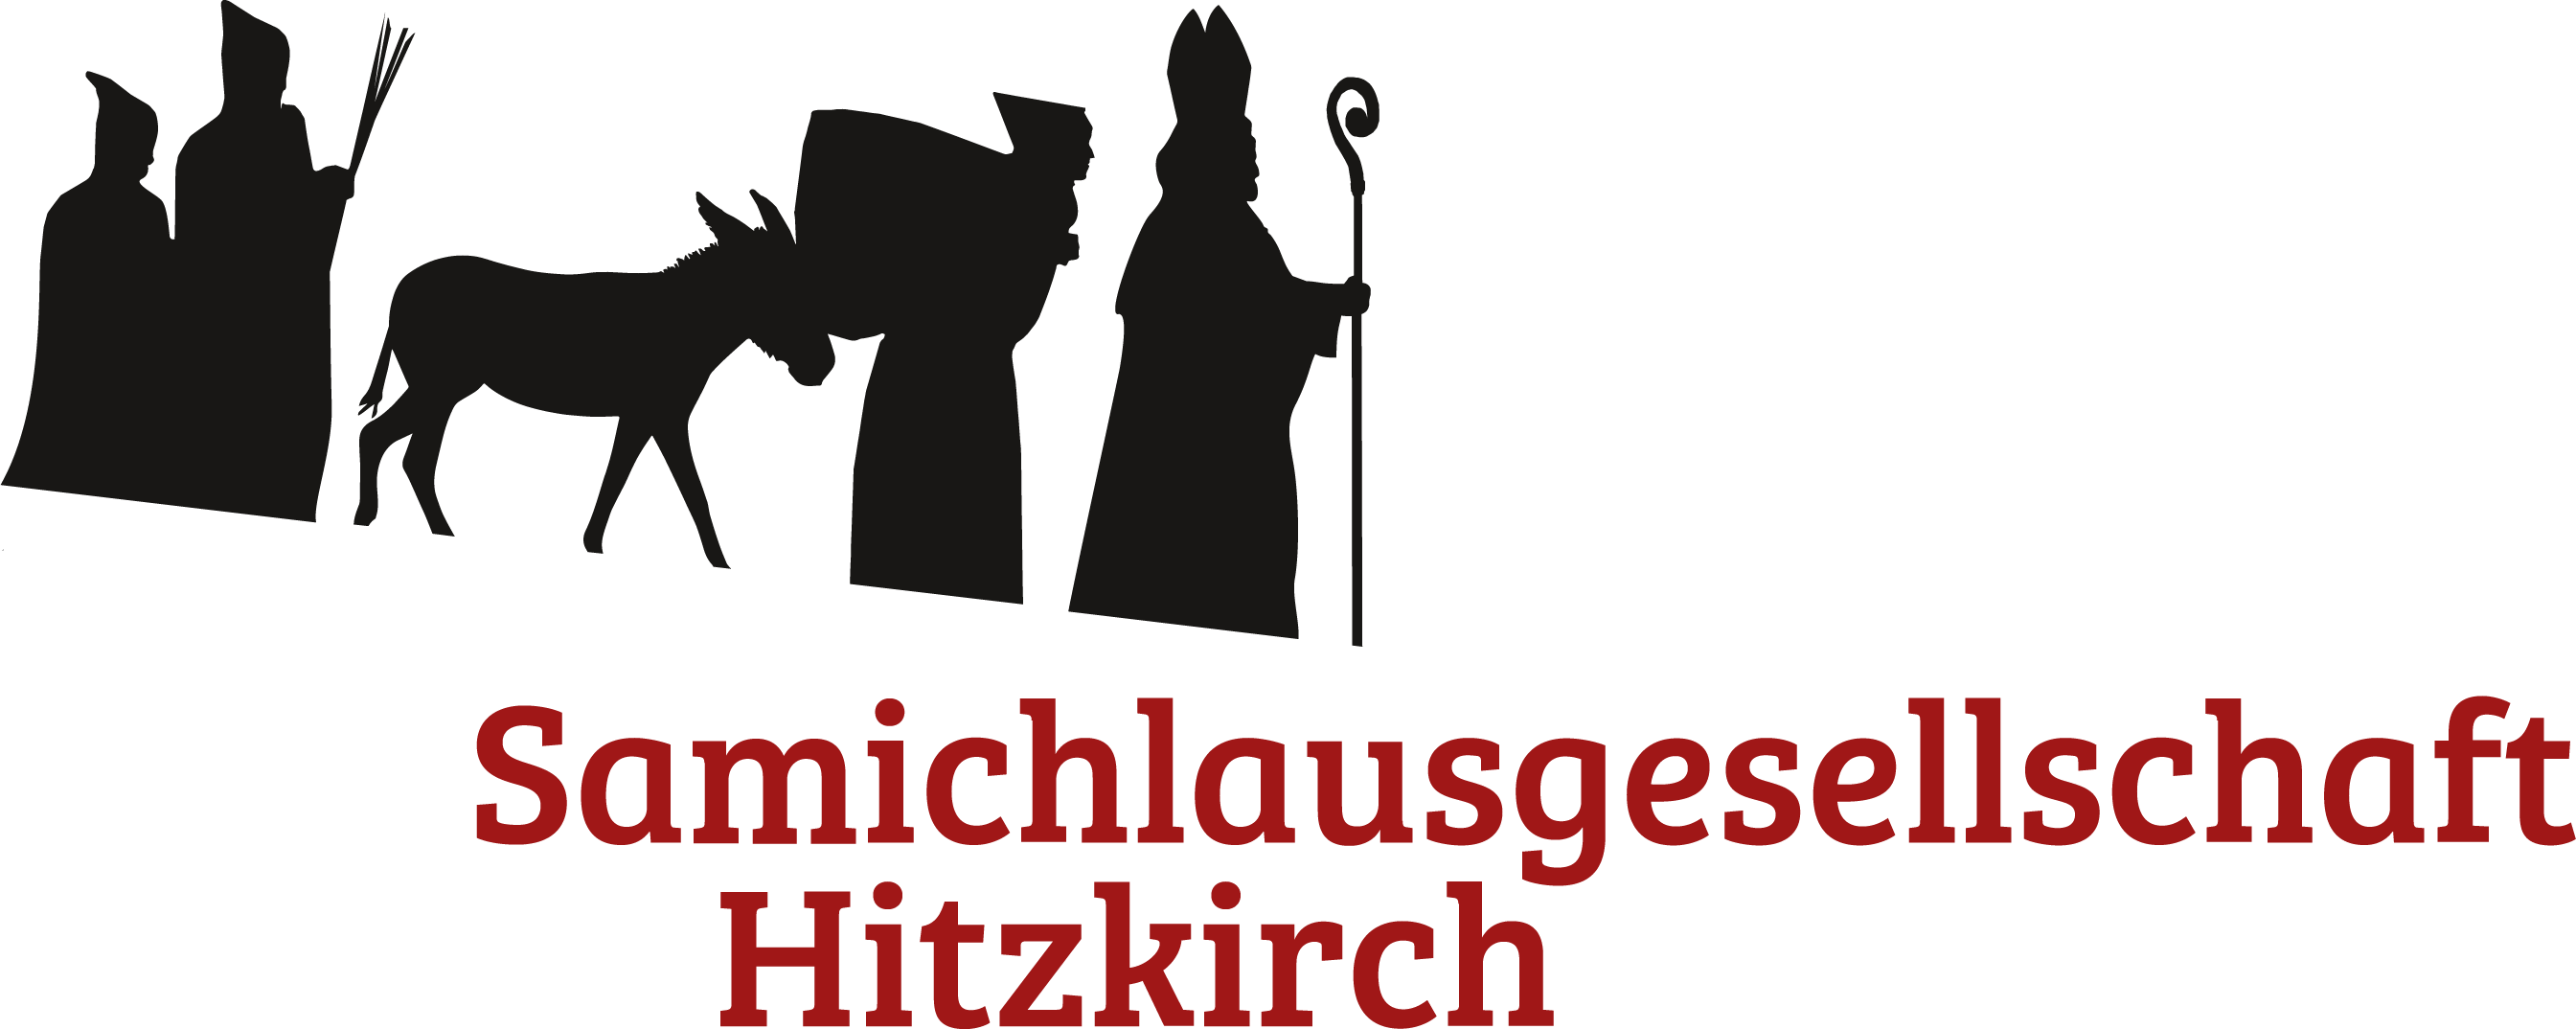 samichlaus-hitzkirch-logo